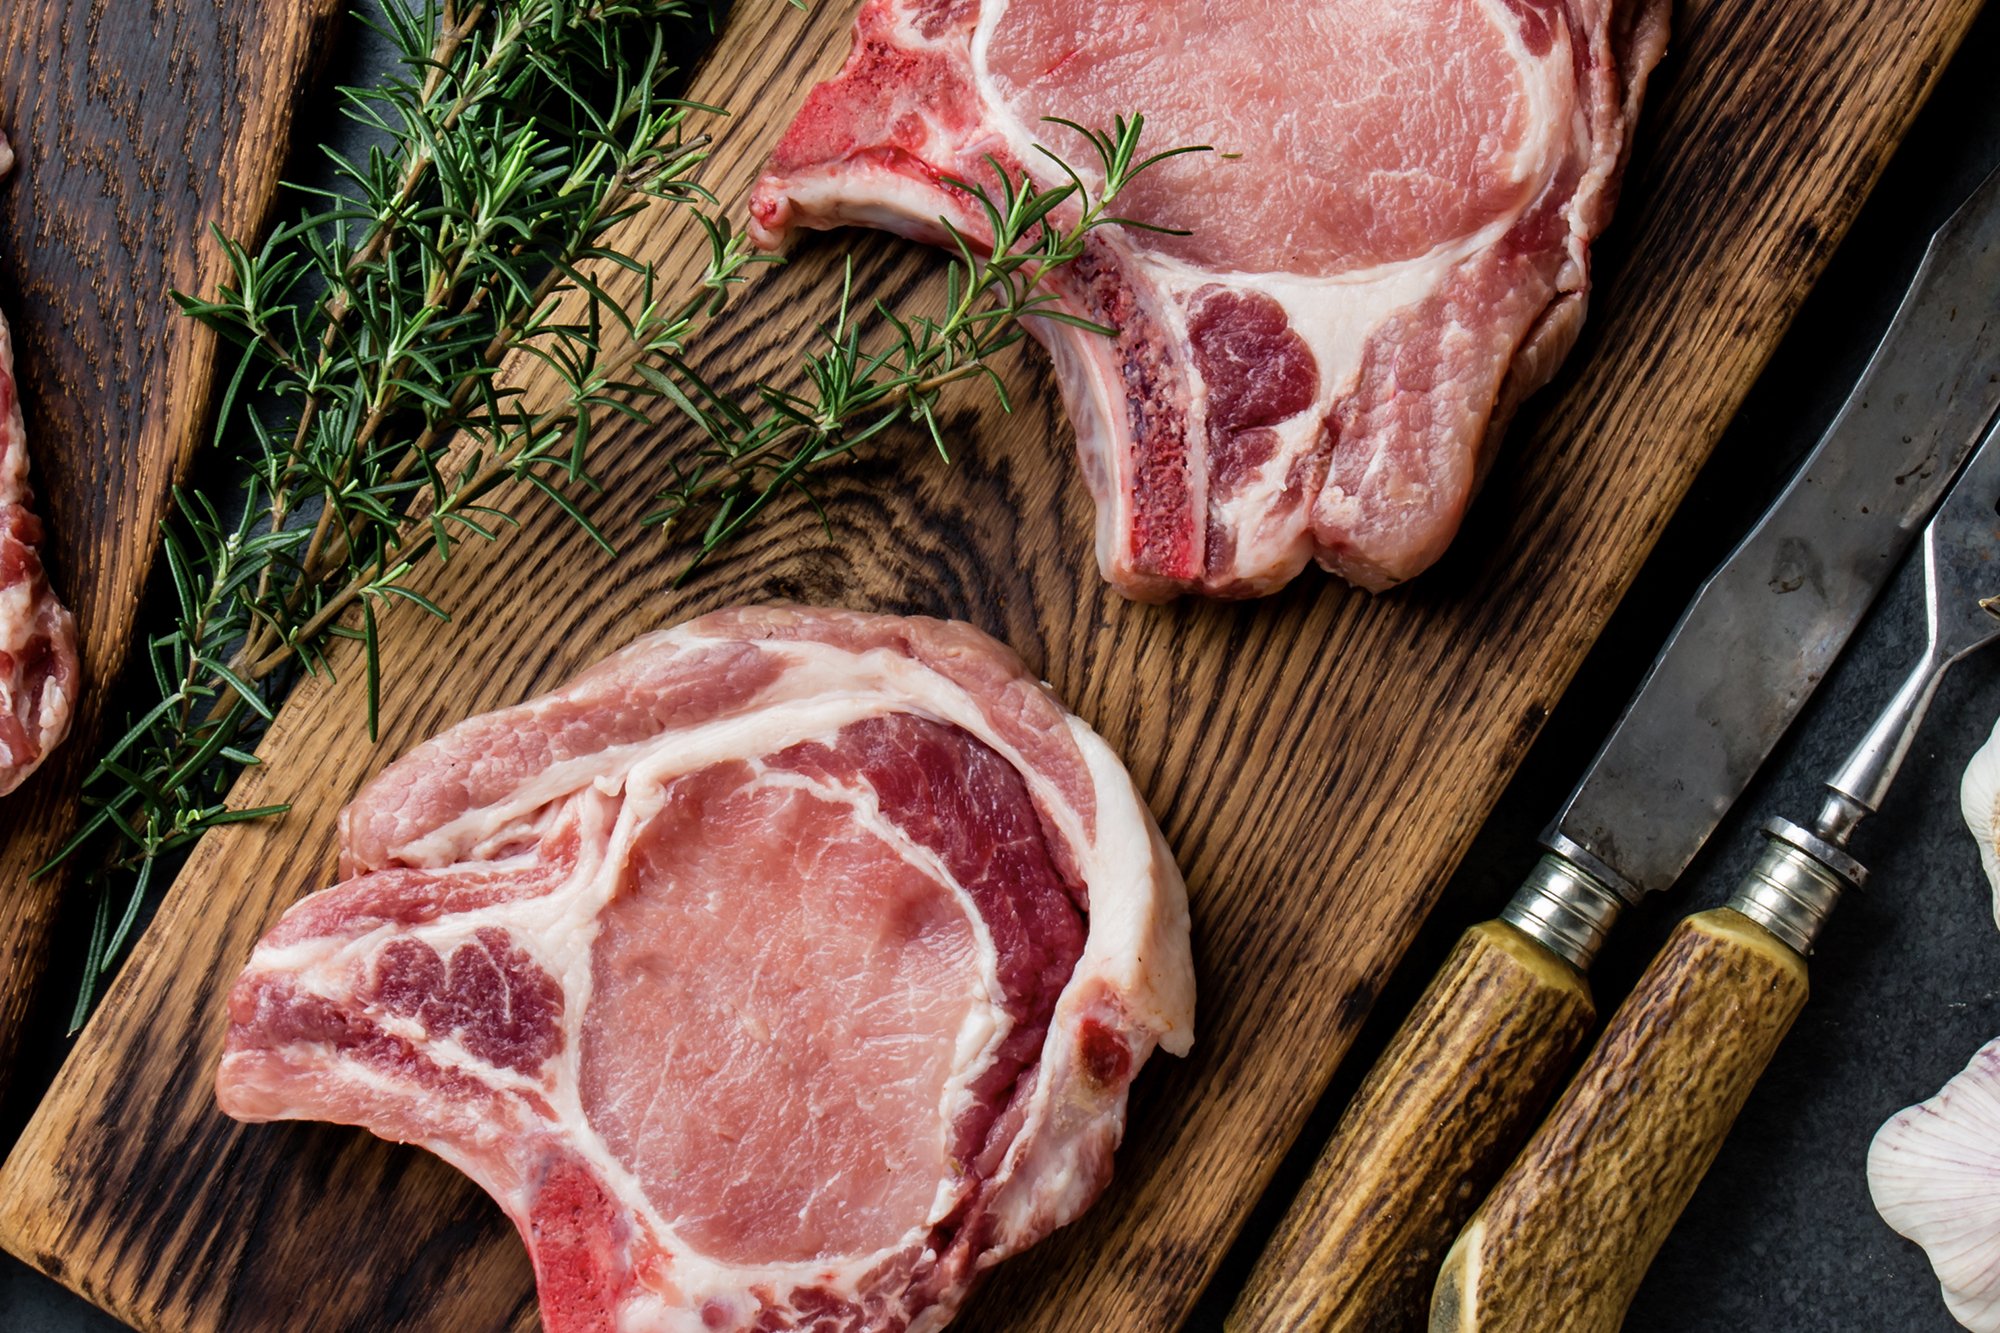 Raw pork chops on cutting board with herbs around